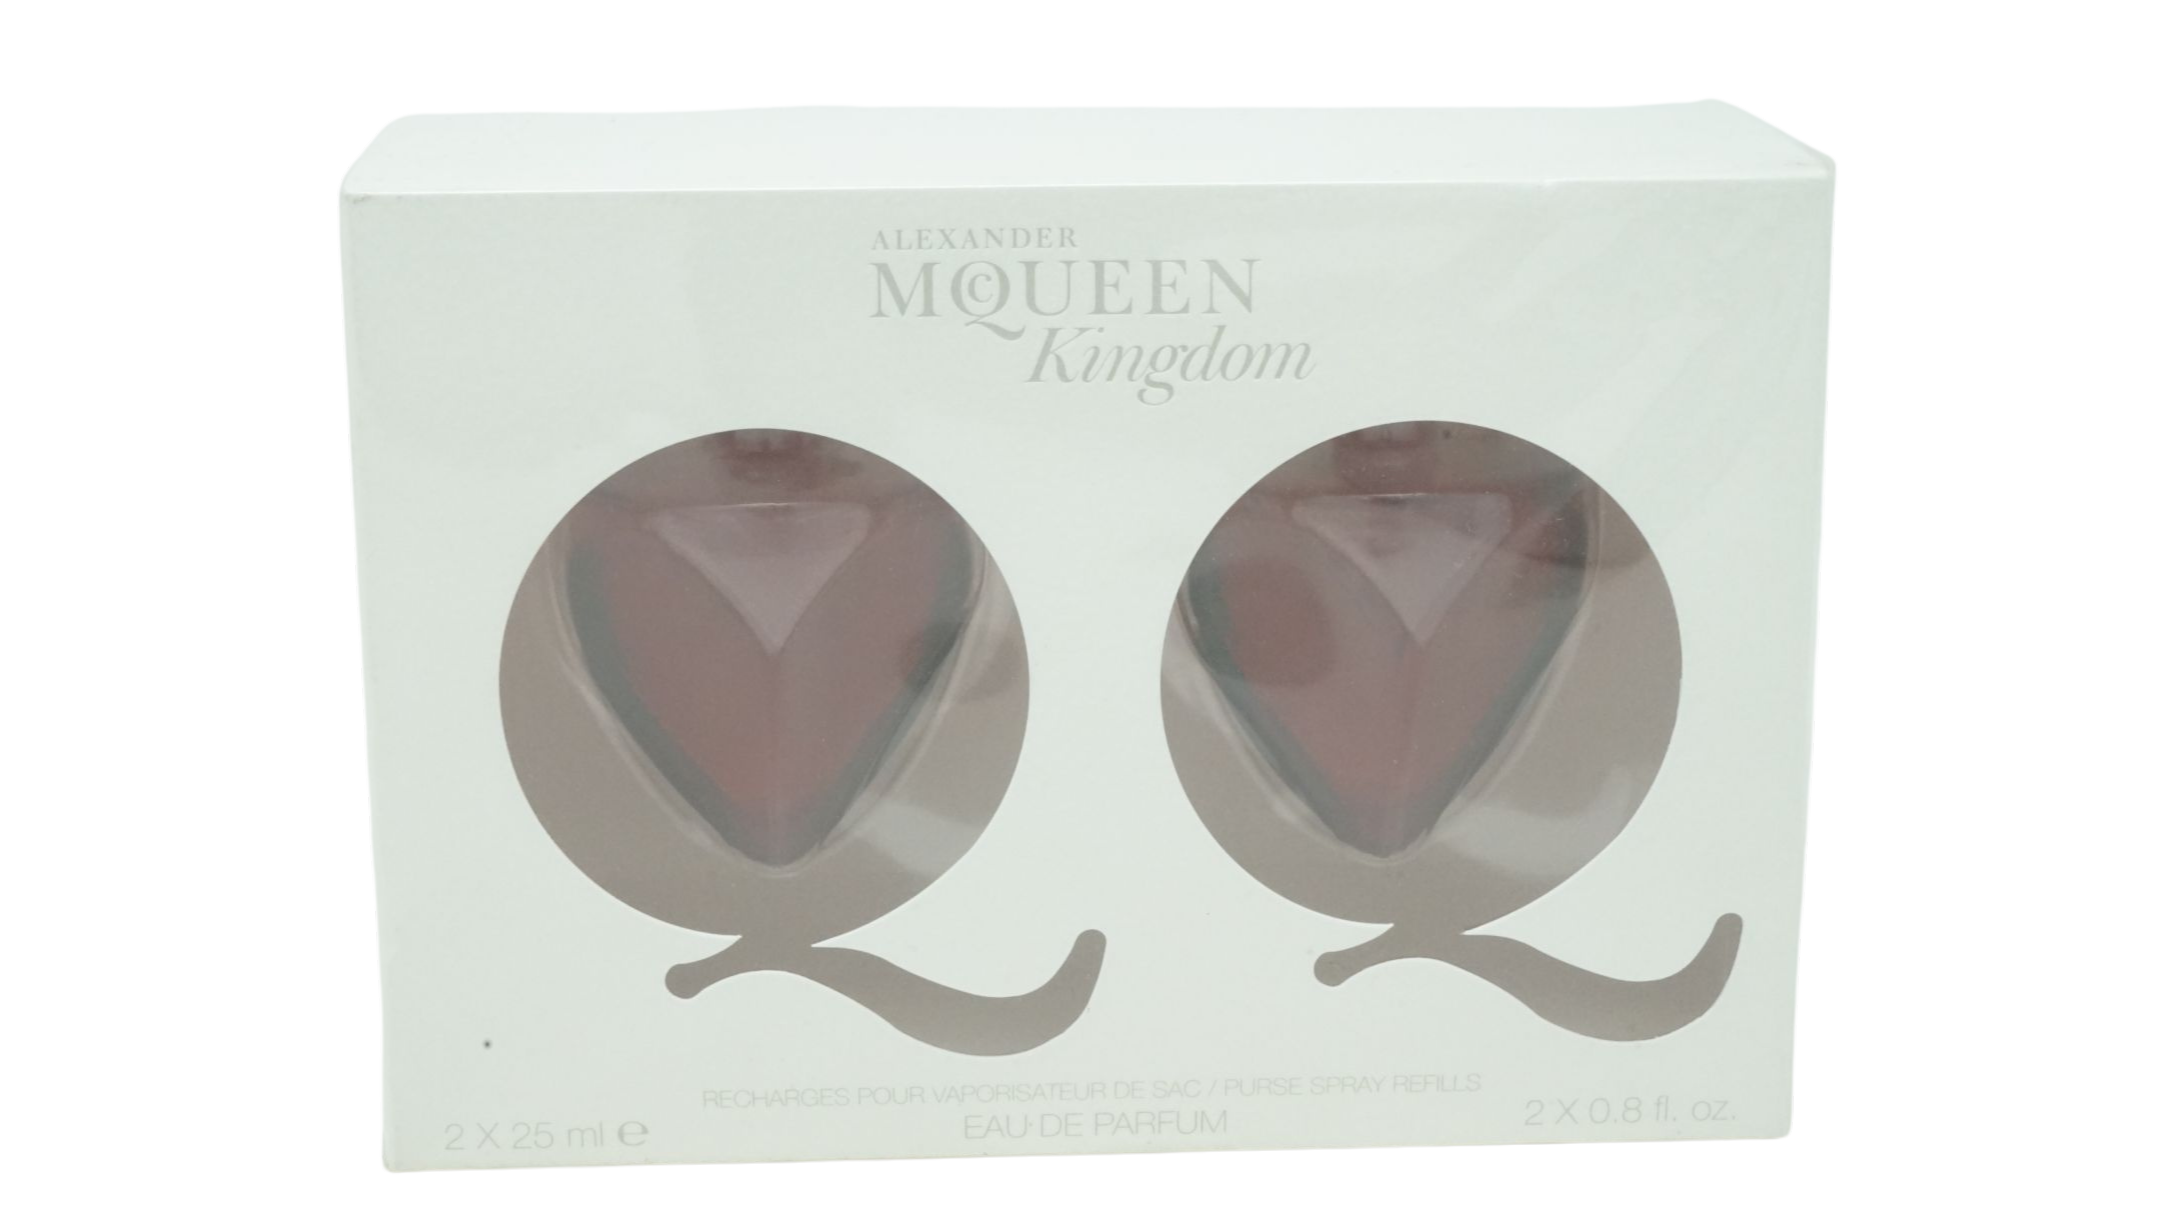 Alexander McQueen Kingdom Eau de Parfum 2x 25ml